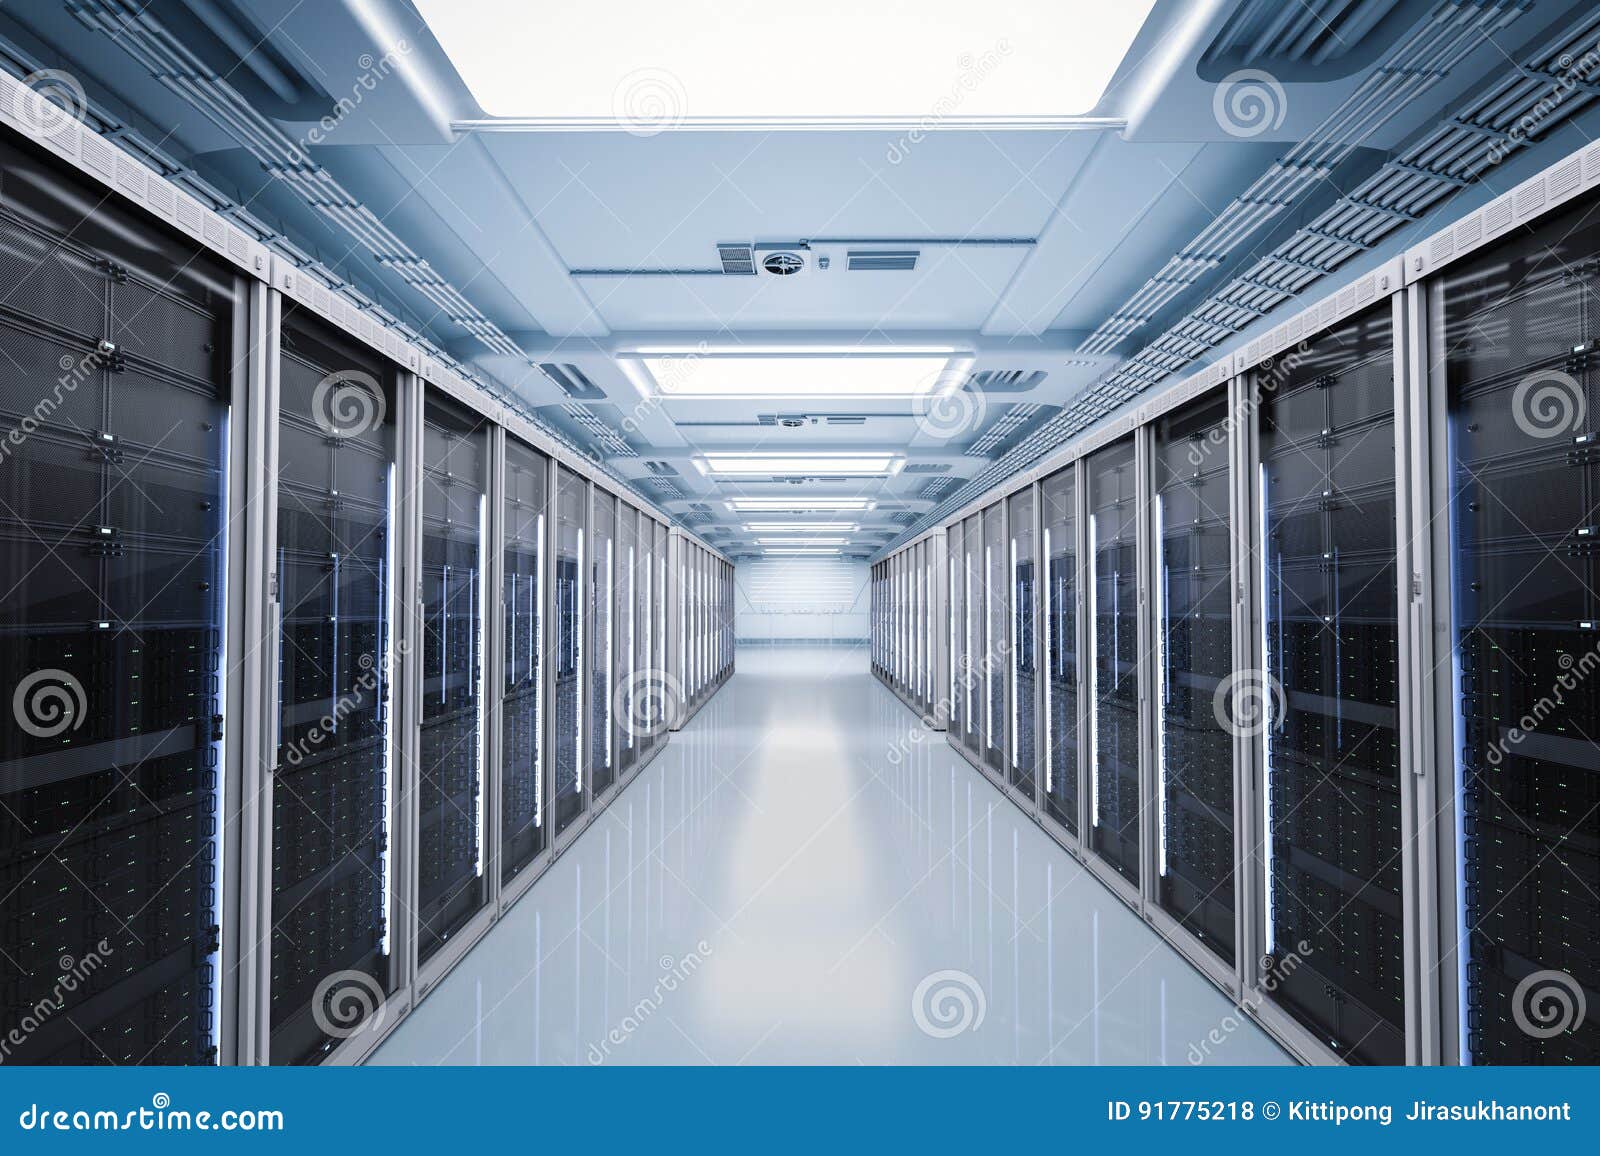 server room or server computers